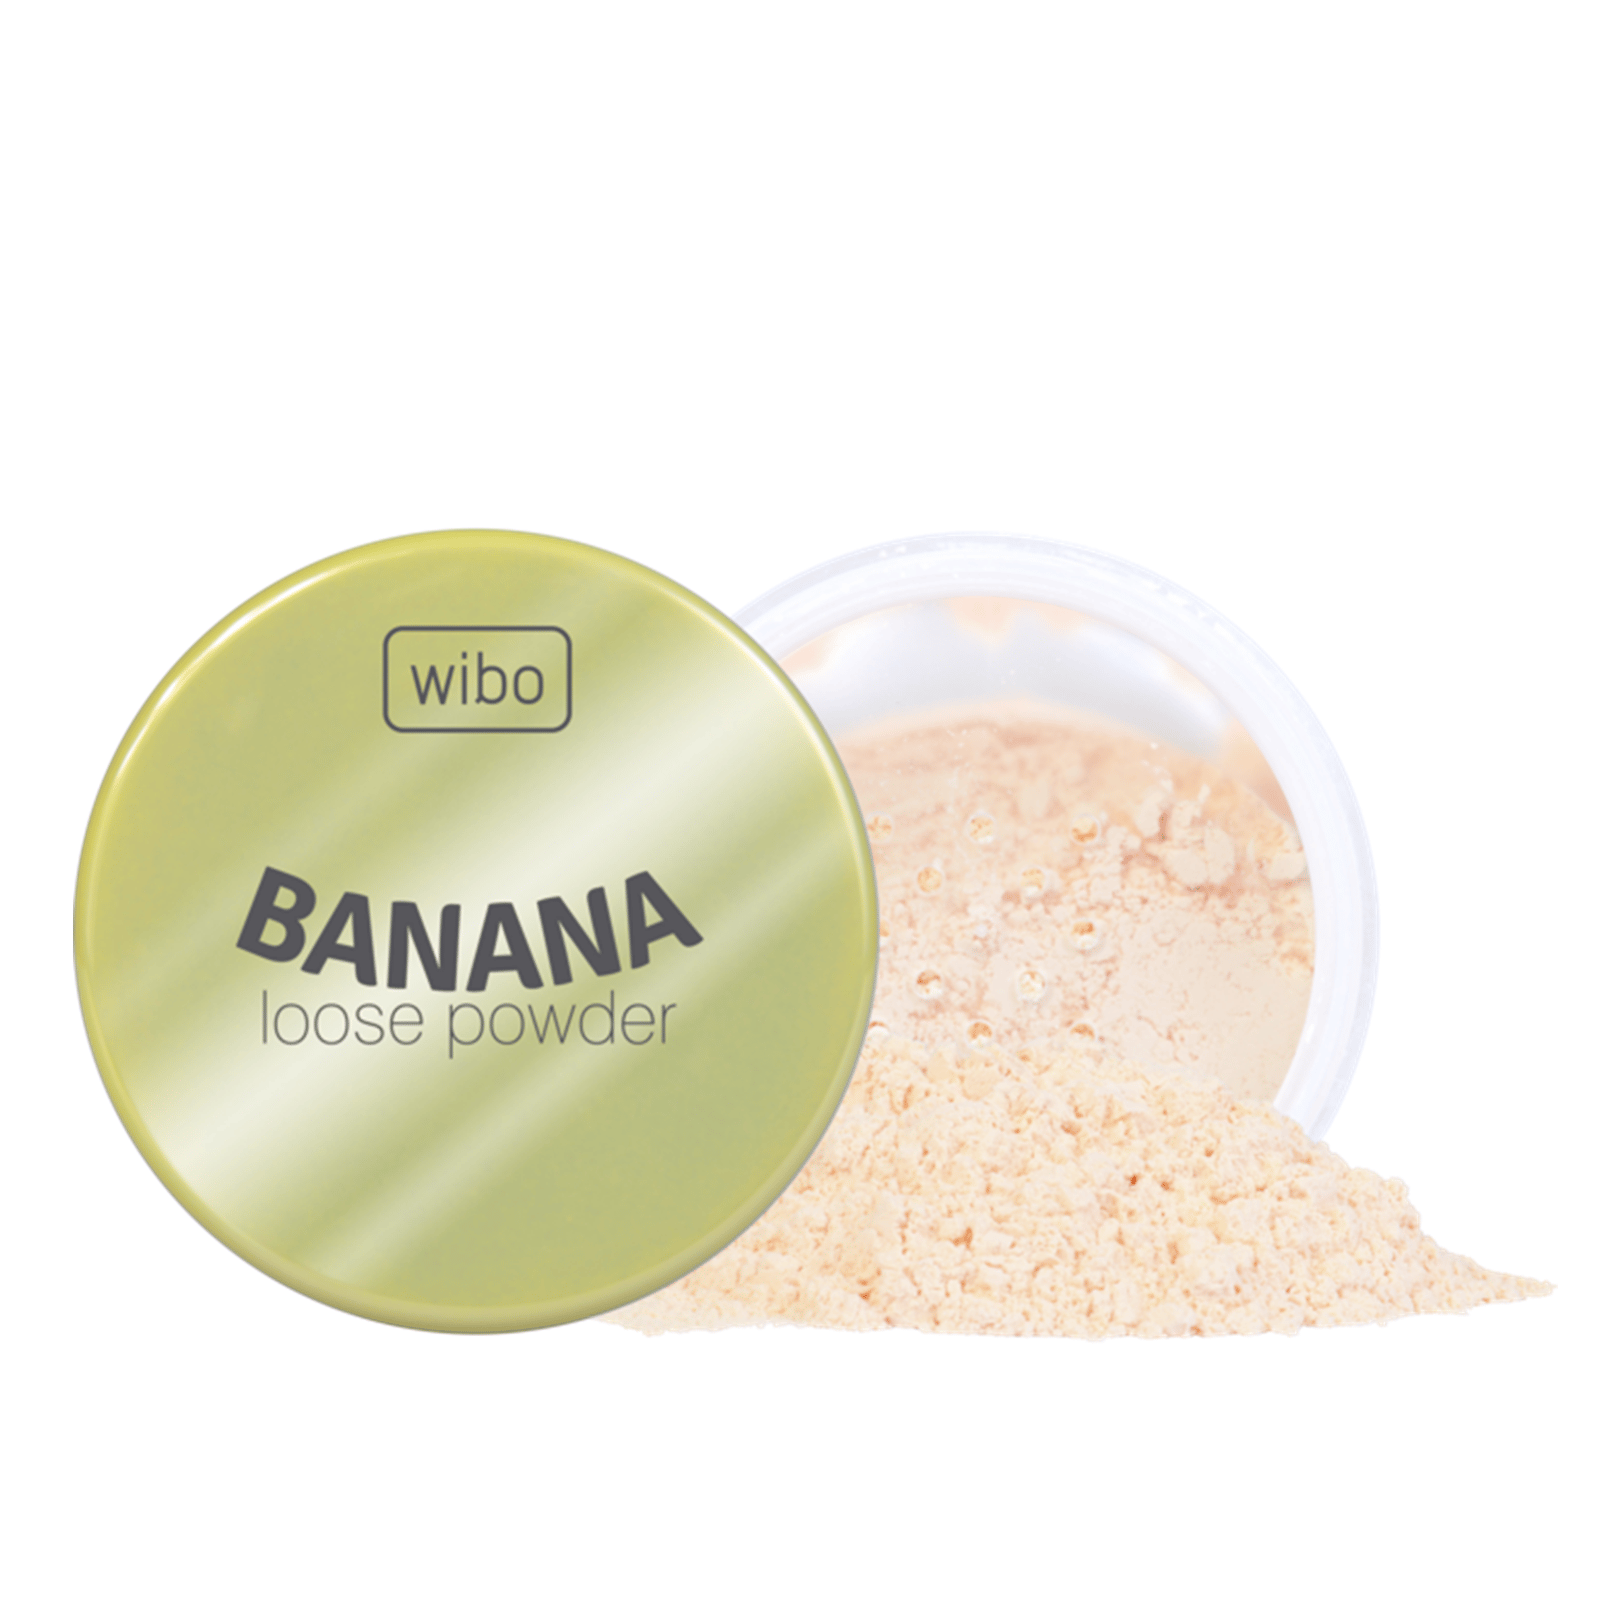 Wibo Banana Loose Powder 5.5g (0.19oz)